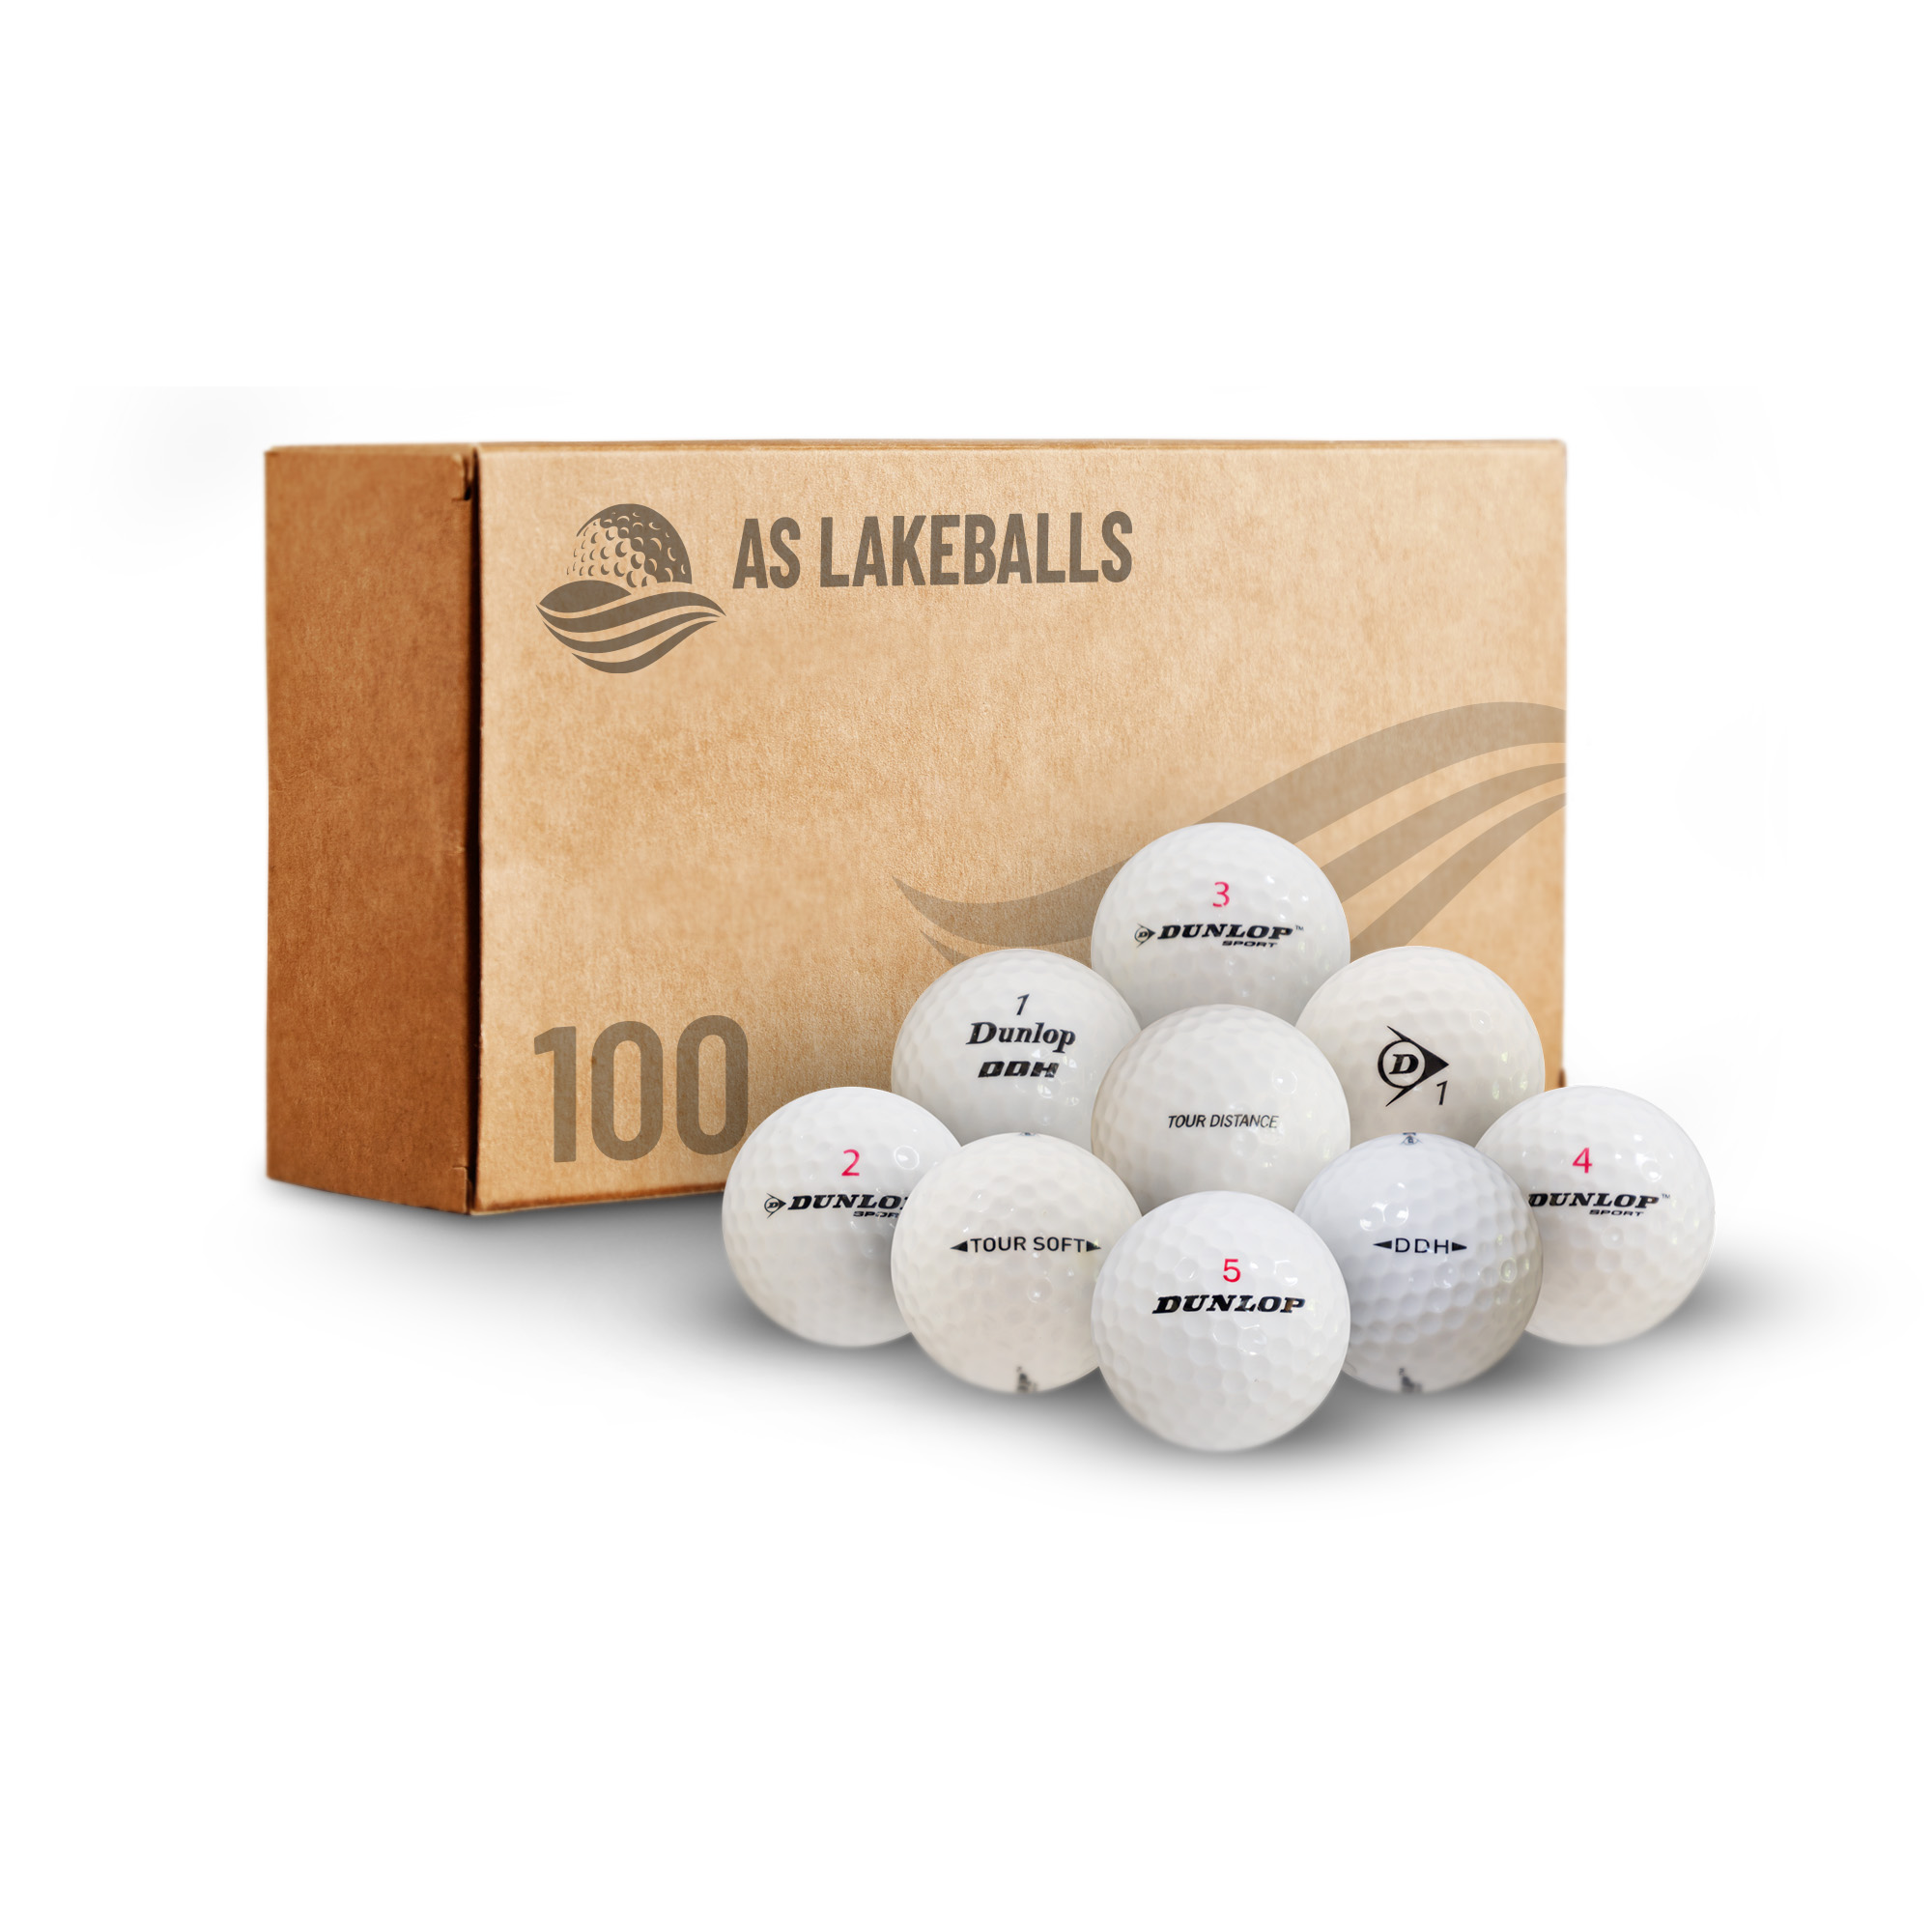 100 Dunlop Mix AA-AAA bei AS Lakeballs günstig kaufen